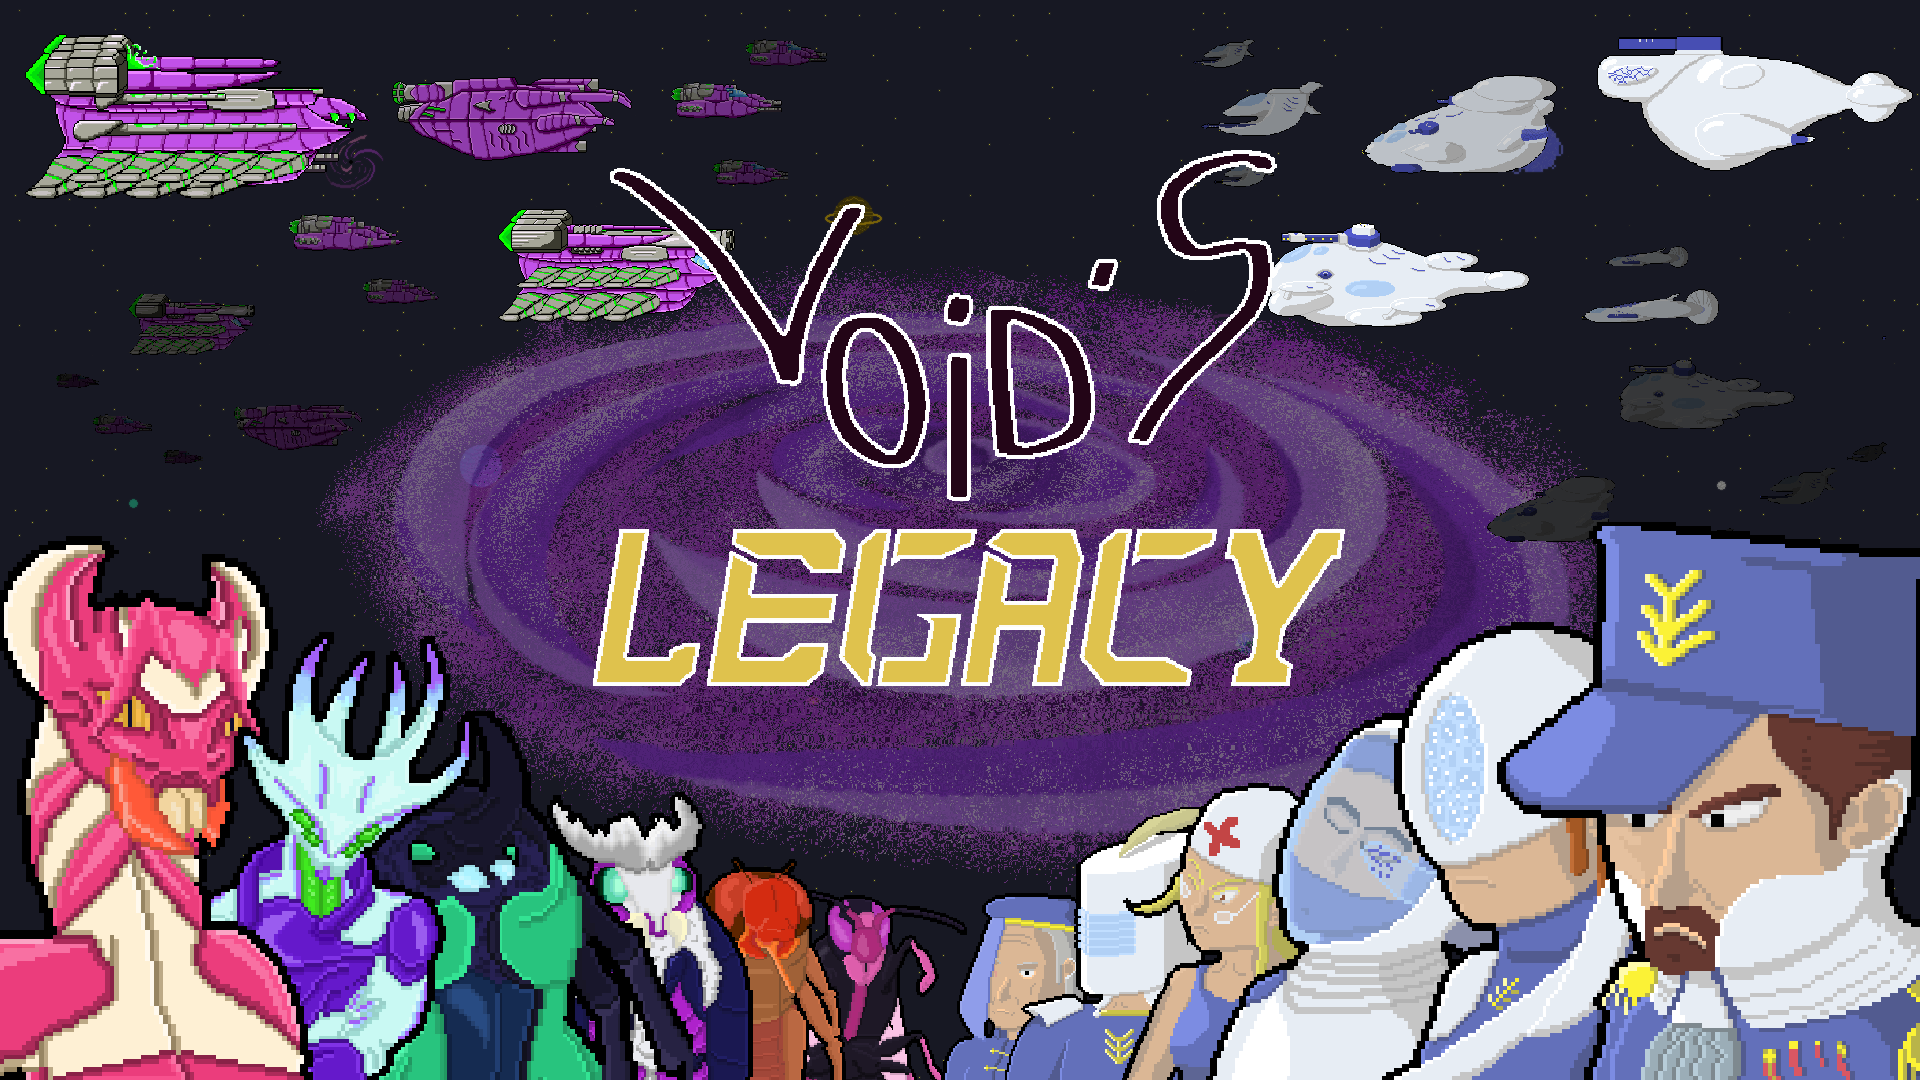 Void's Legacy